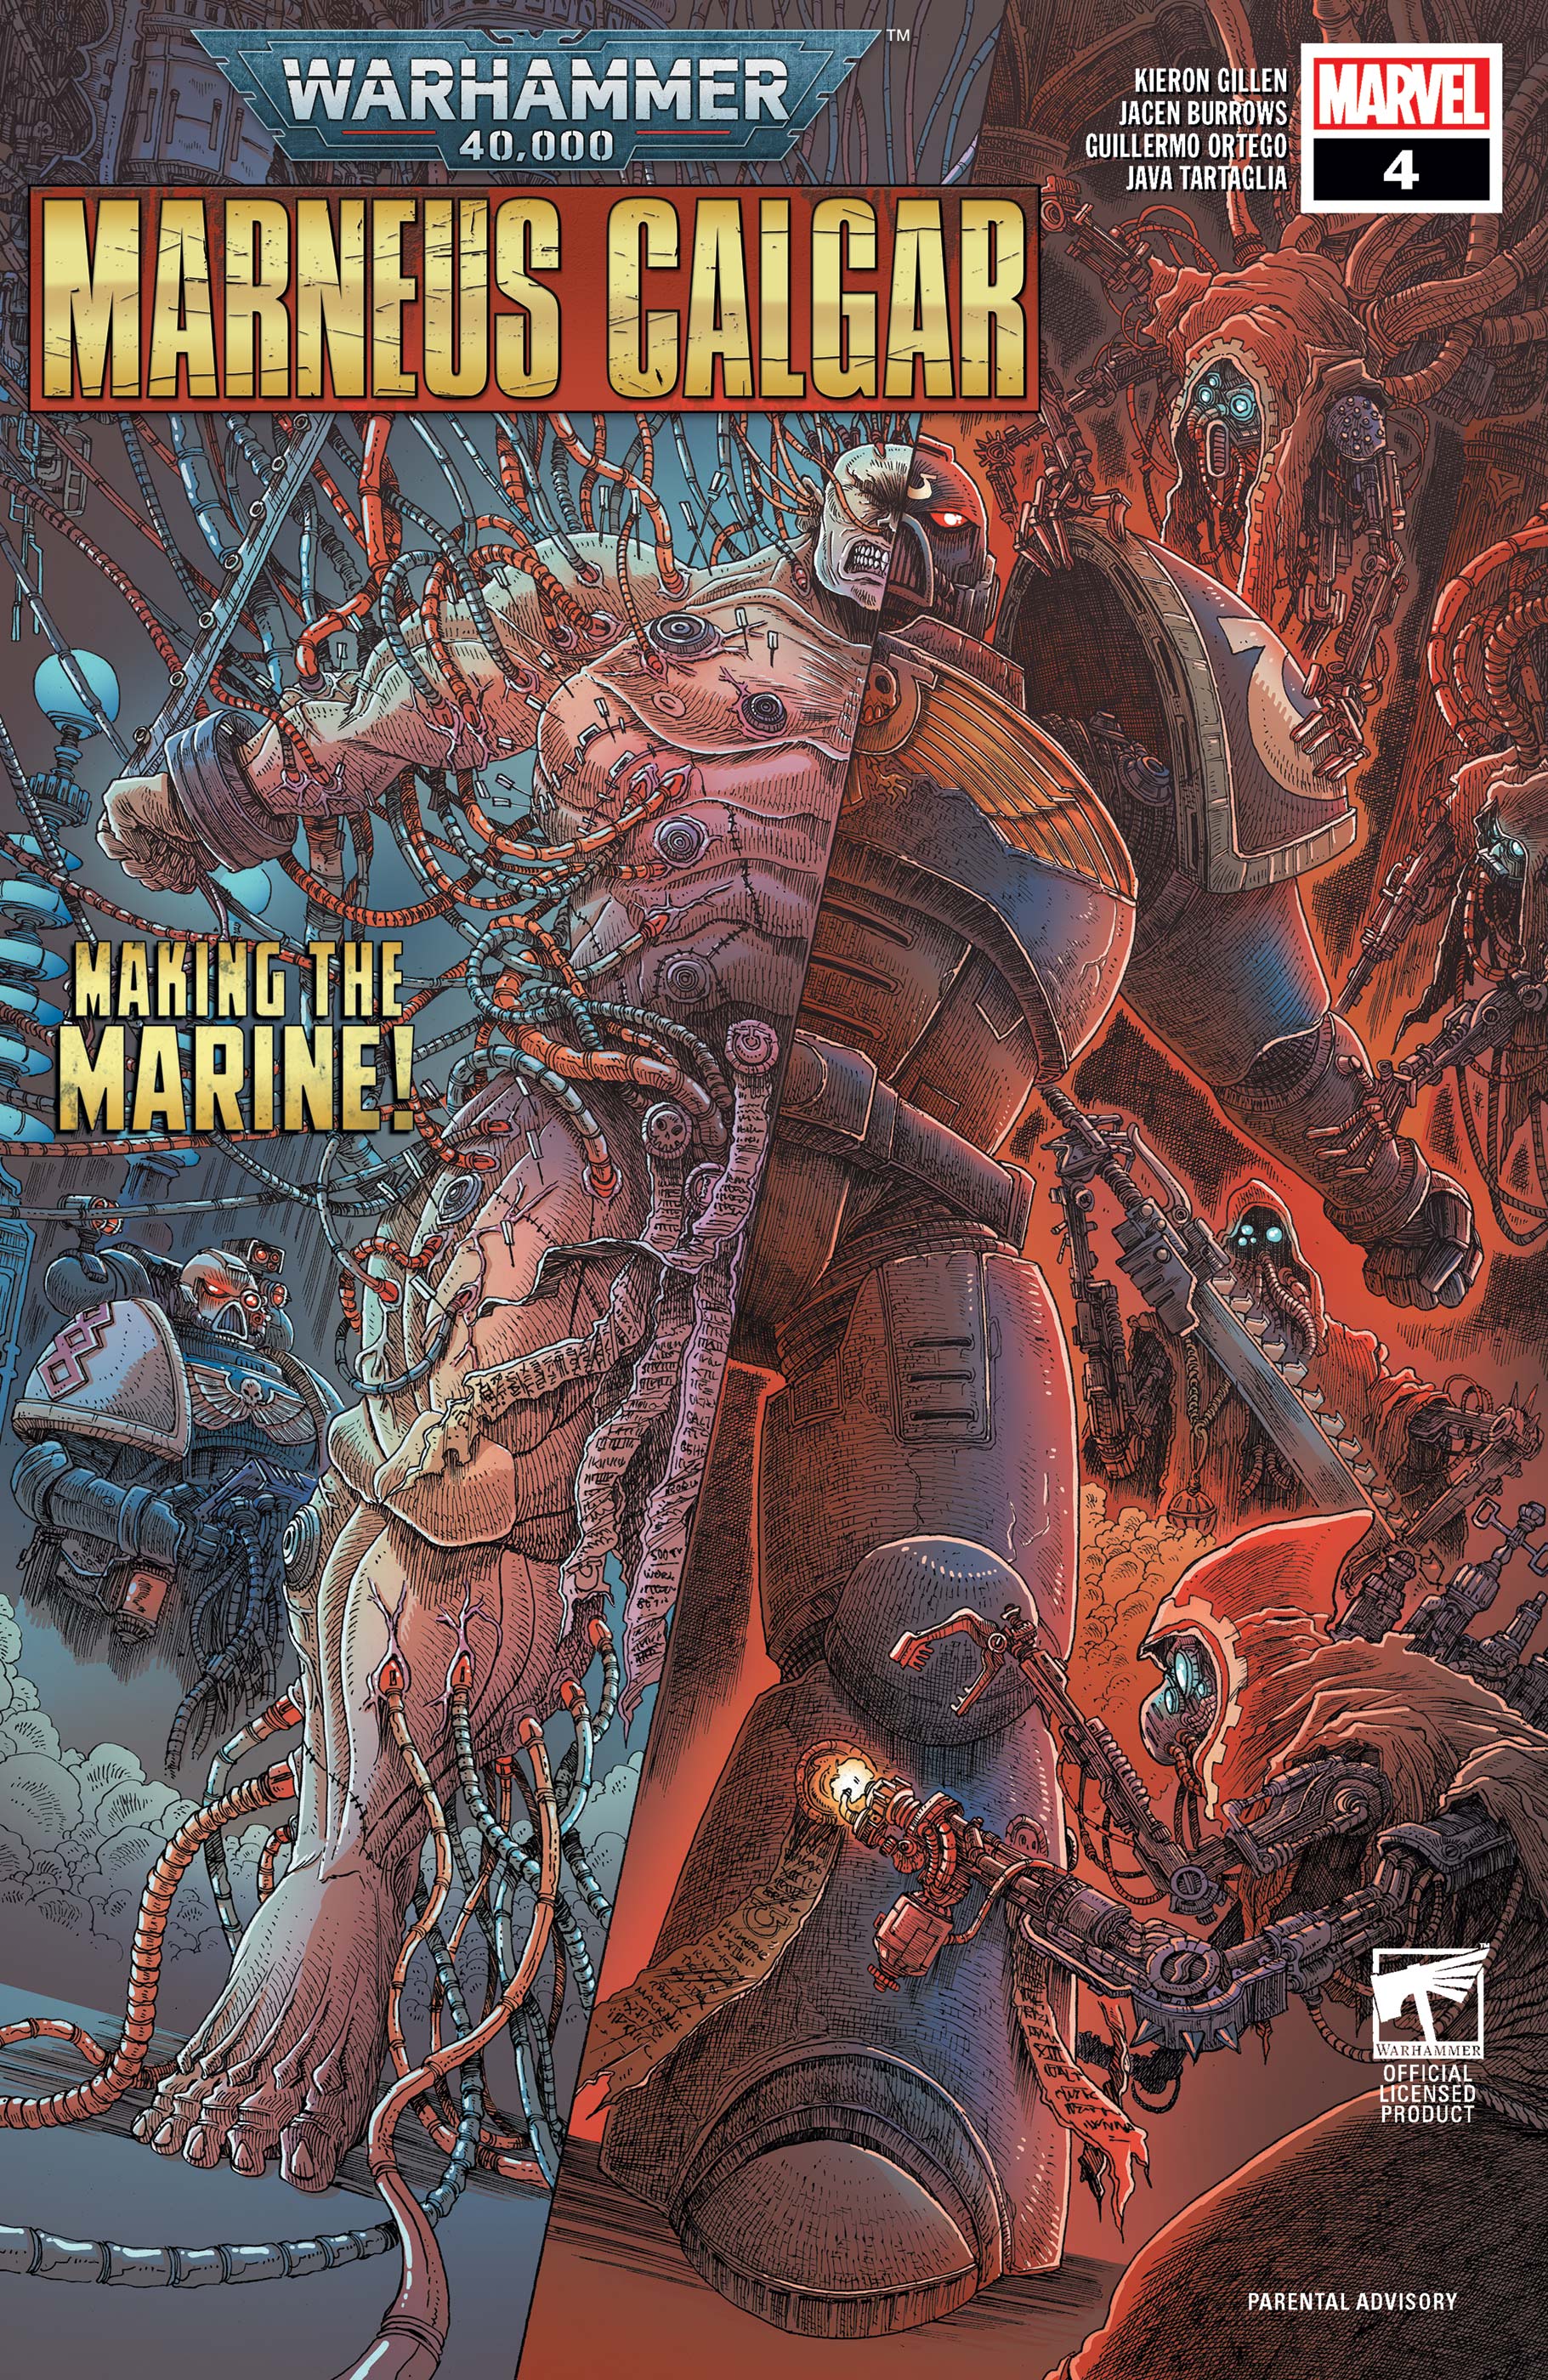 Warhammer 40000 comics